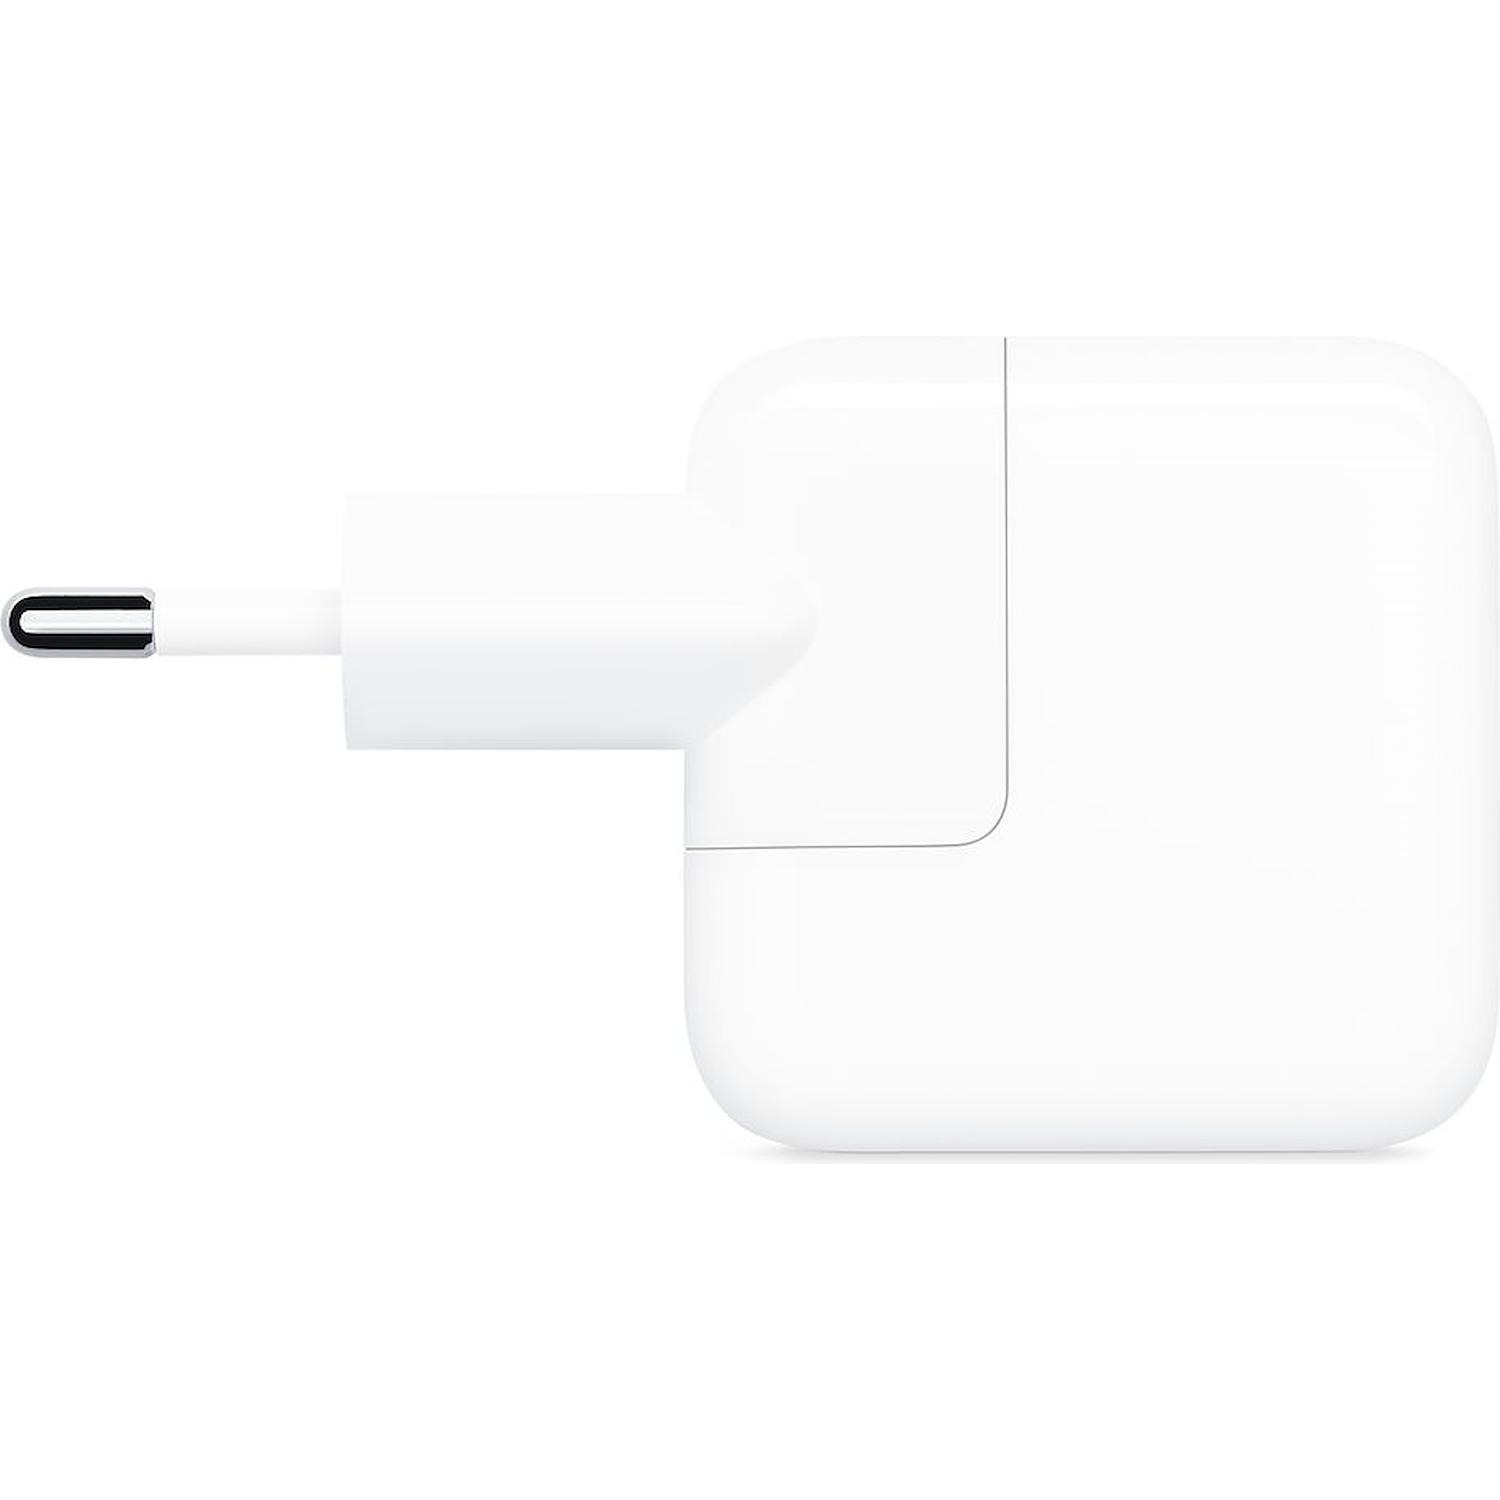 Immagine per Alimentatore USB Apple da 12W da DIMOStore